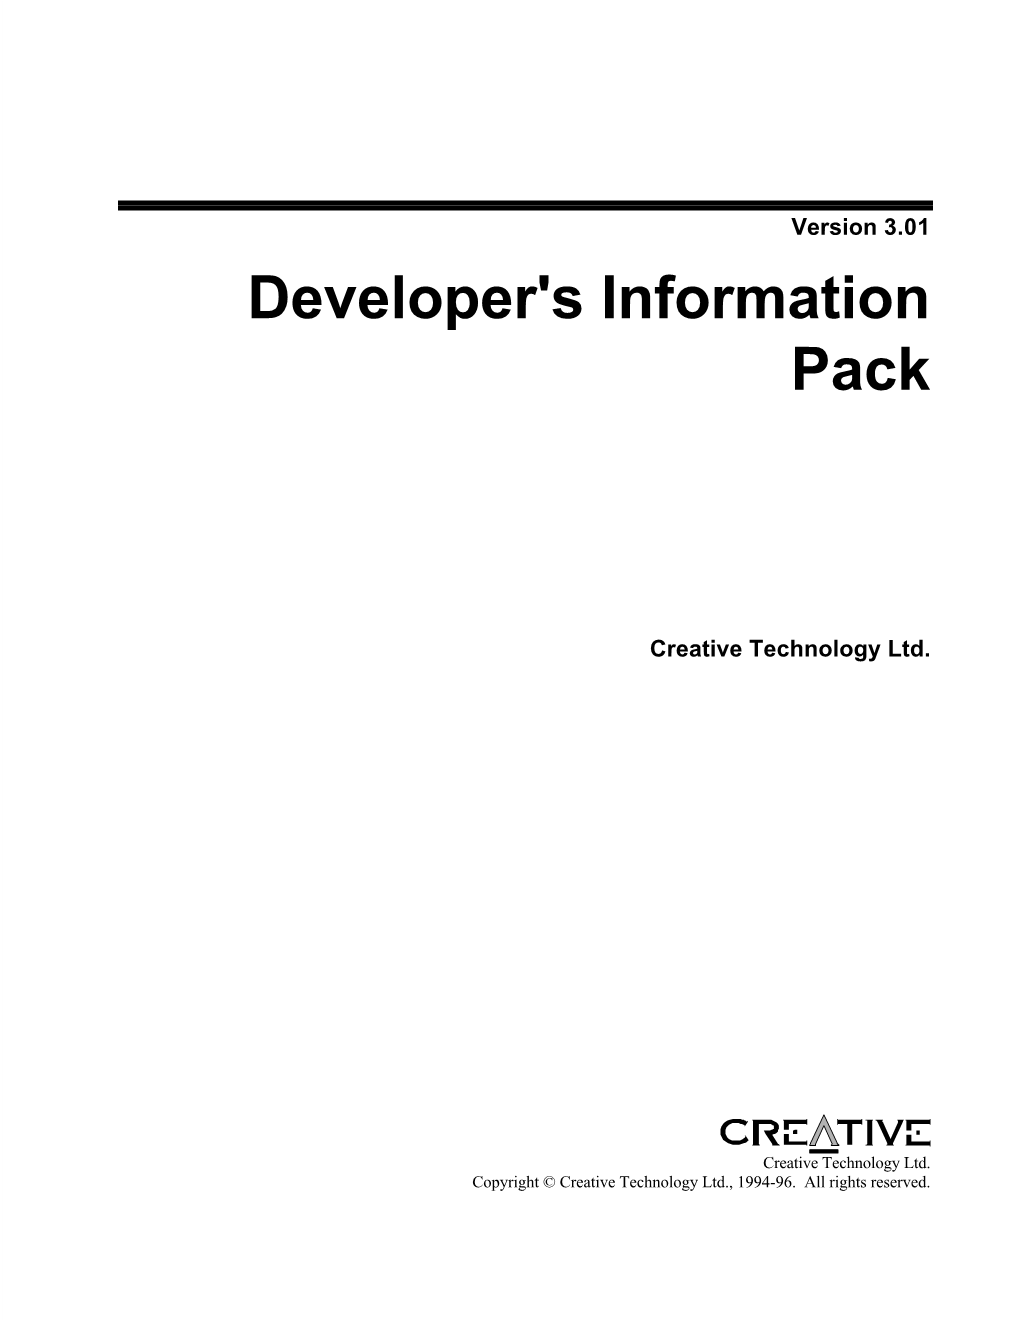 Developer's Information Pack